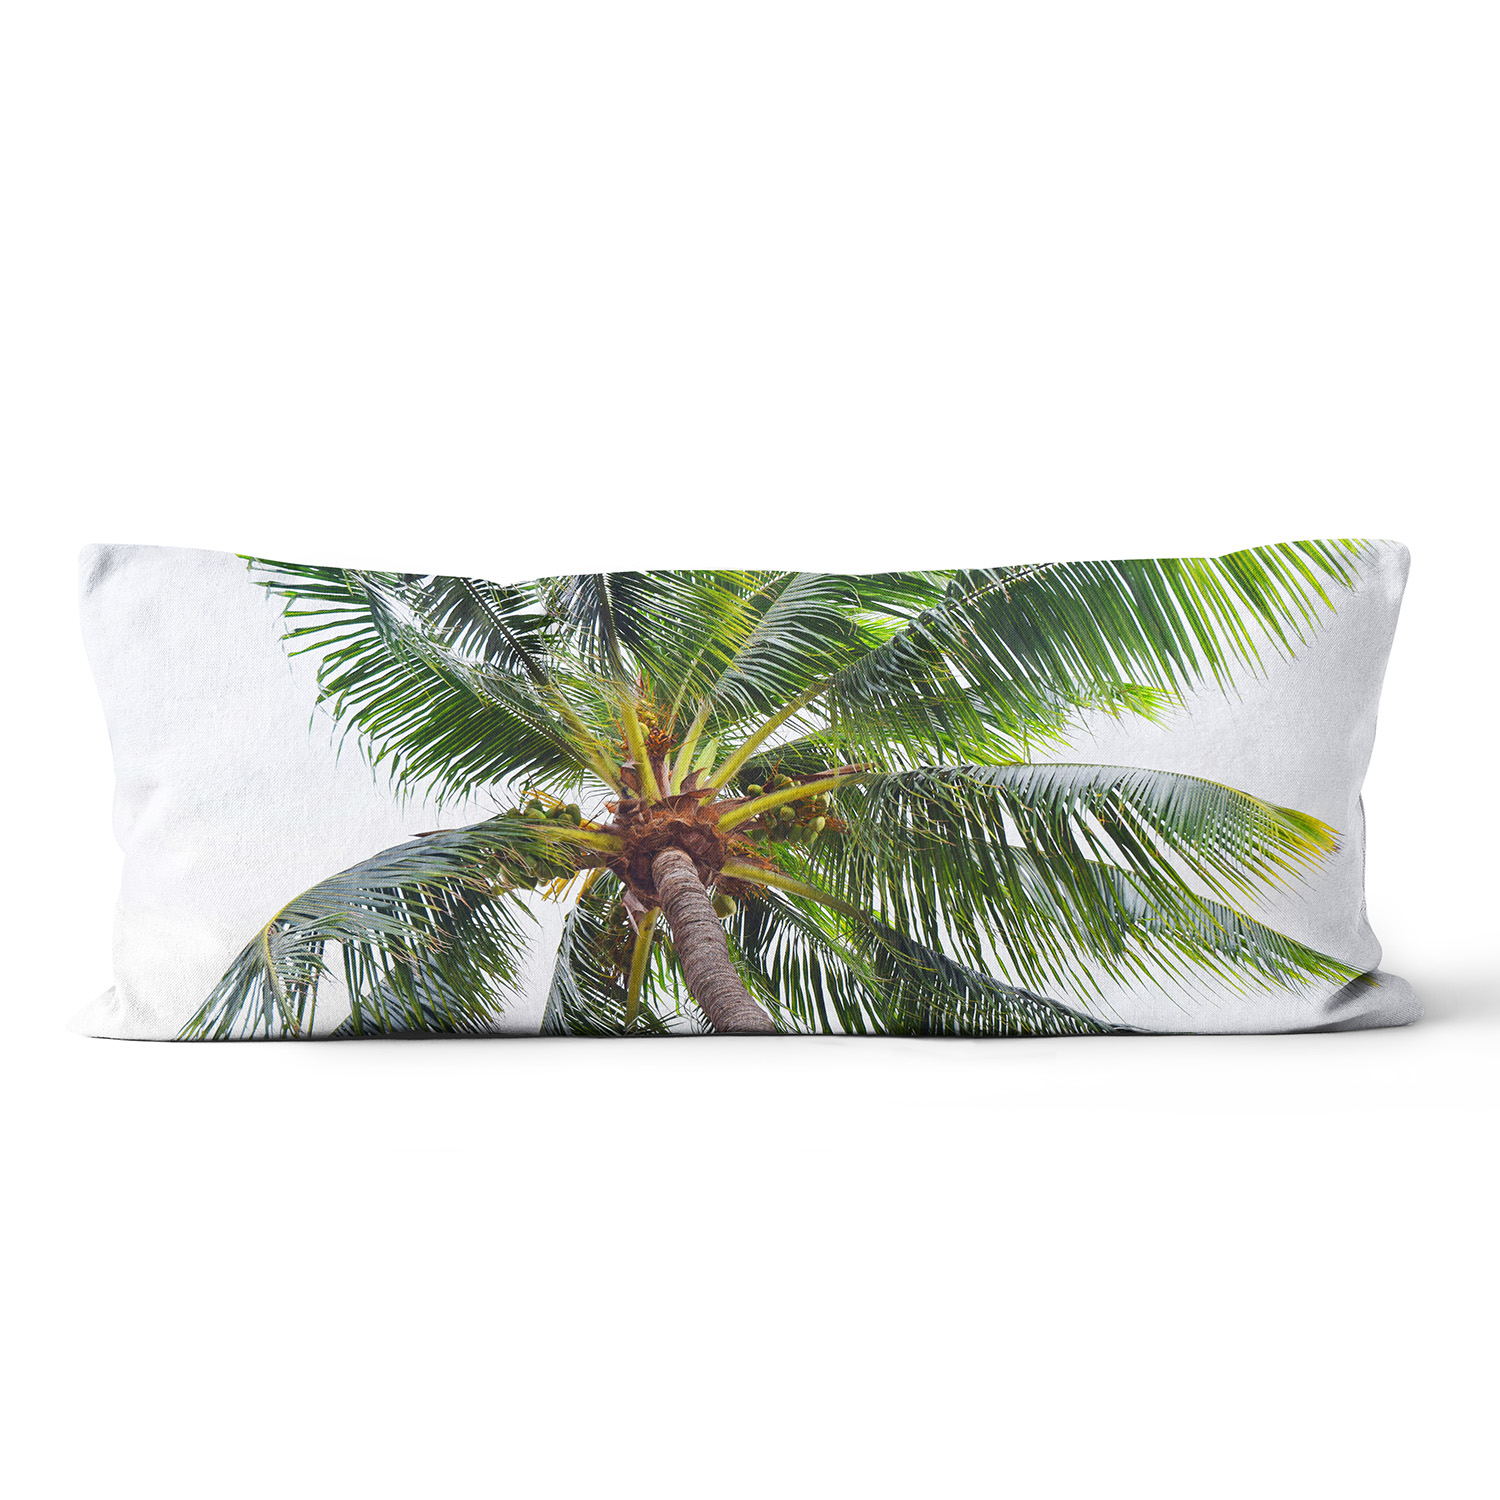 Caribbean Palm Body Pillow Beach Surf Decor By Nature City Co